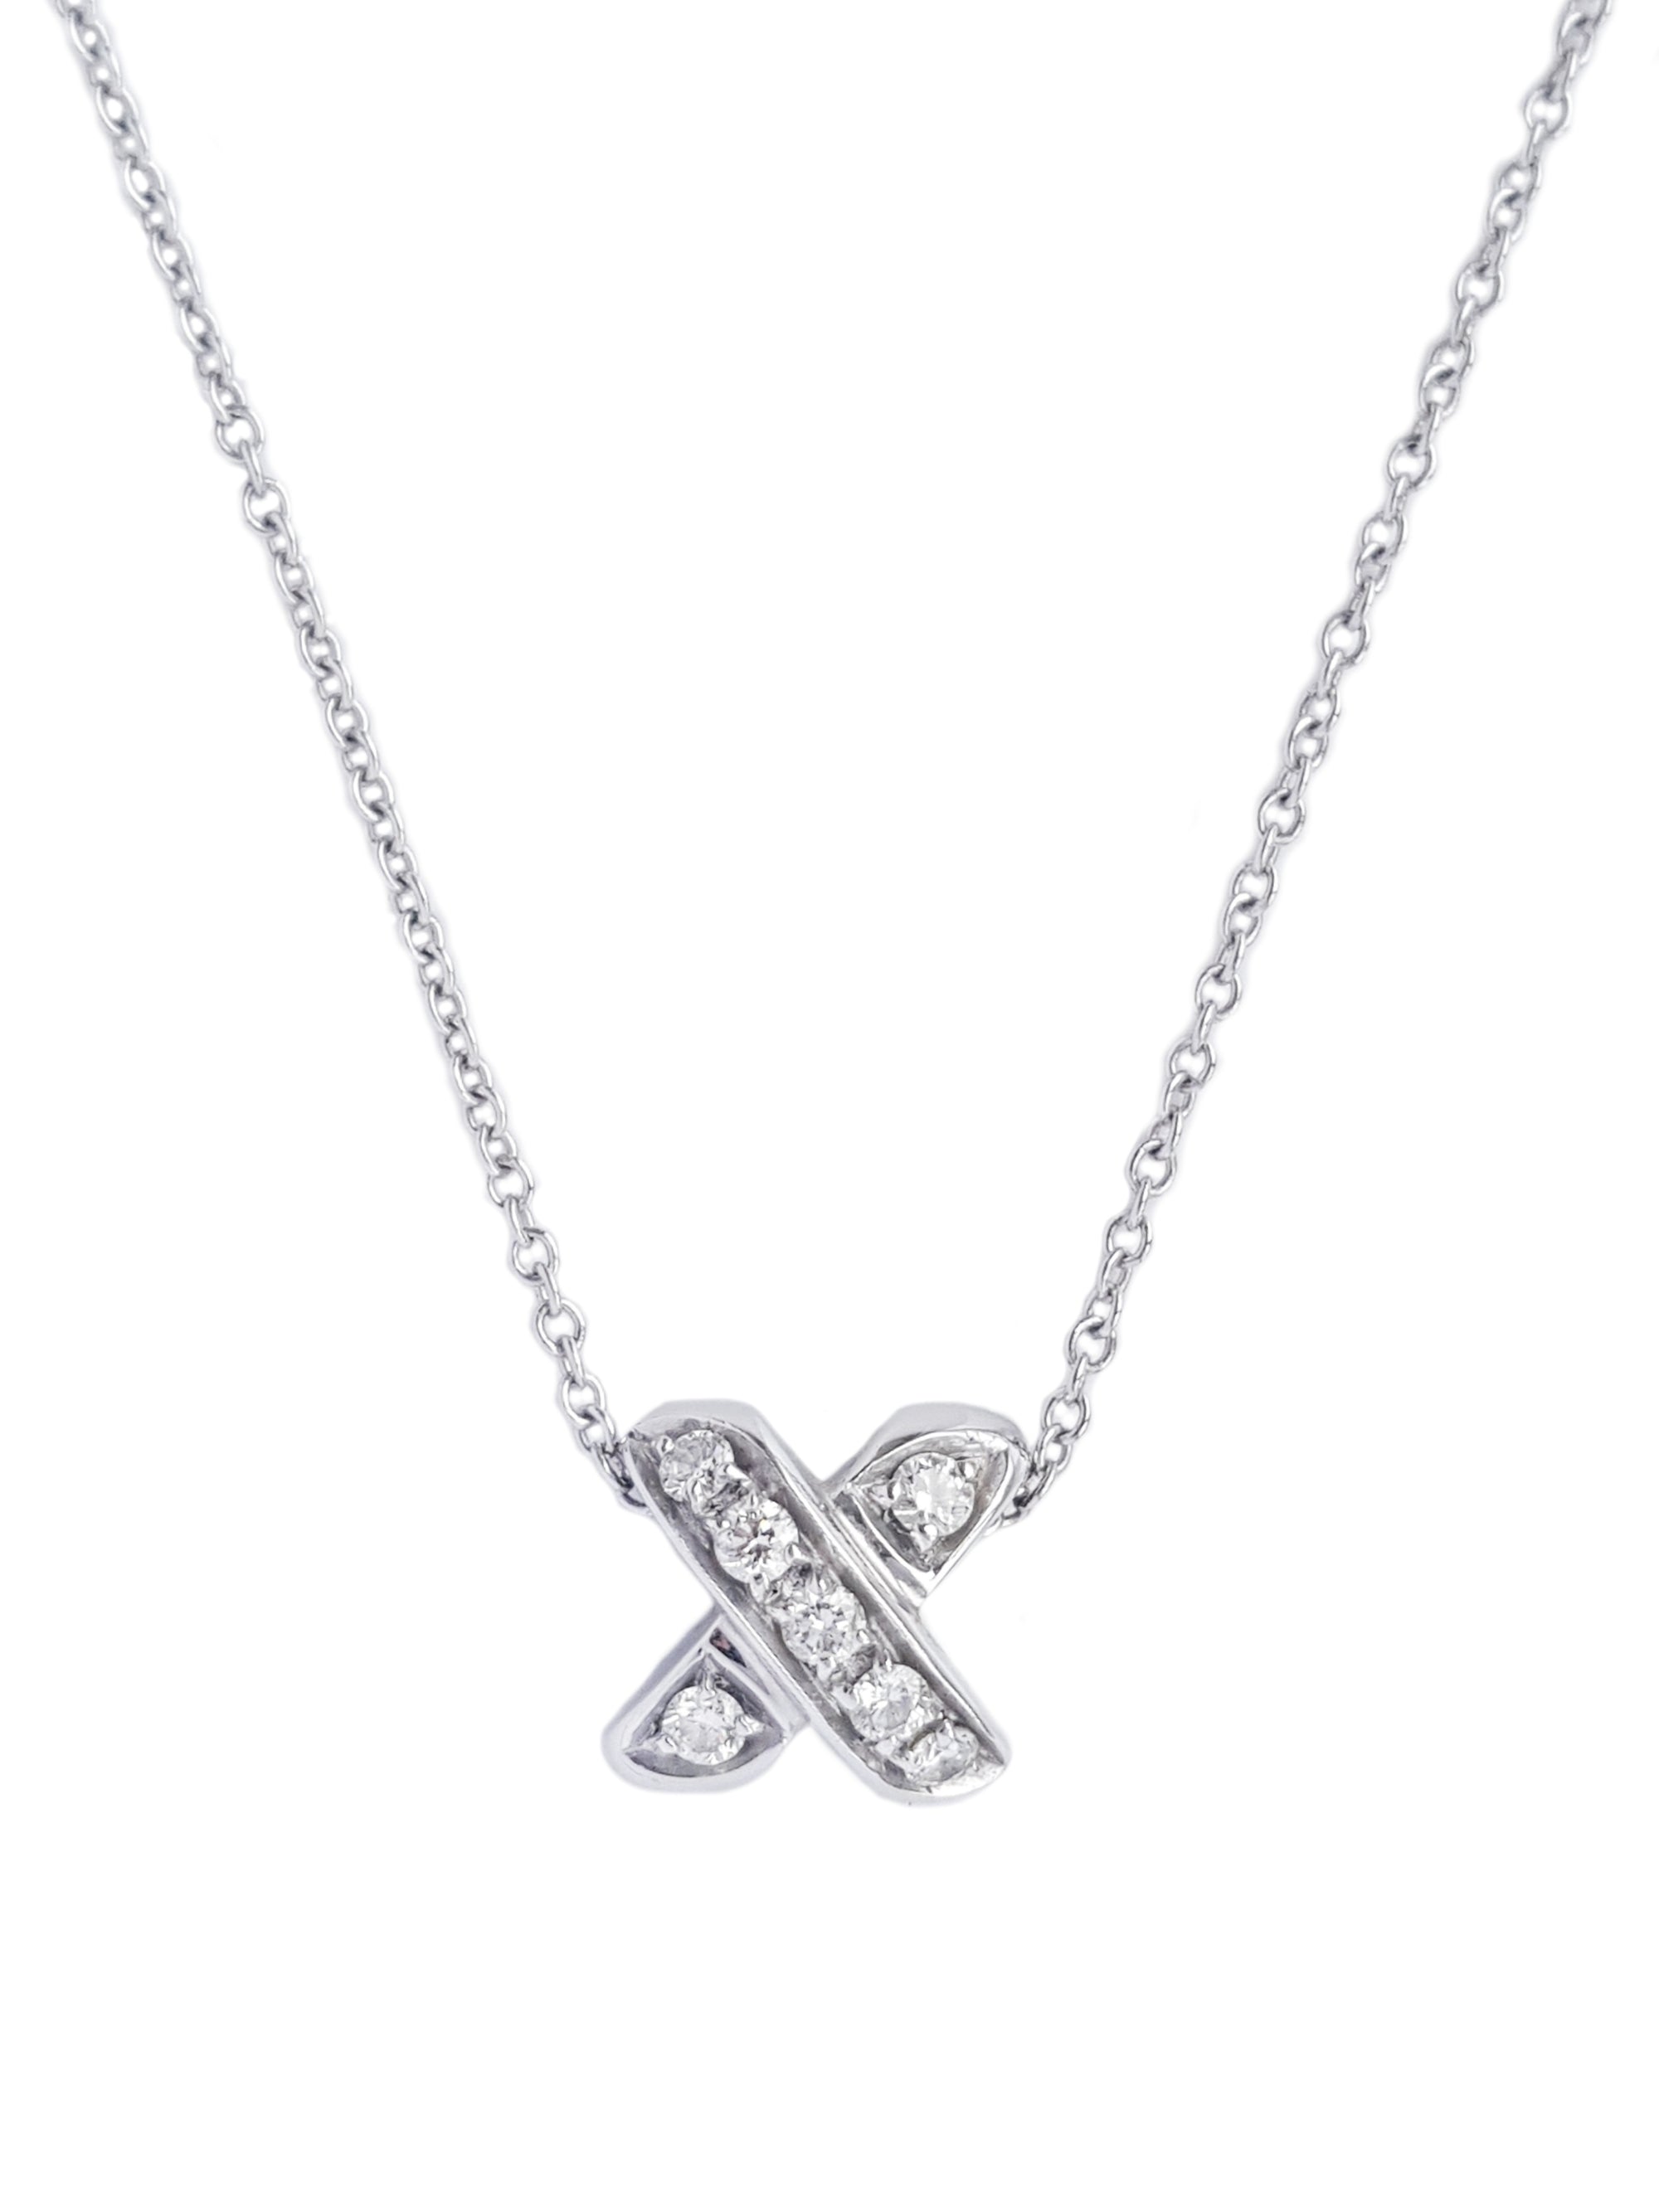 Tiffany & Co 750 (Gold) Signature X Diamond Necklace 16"